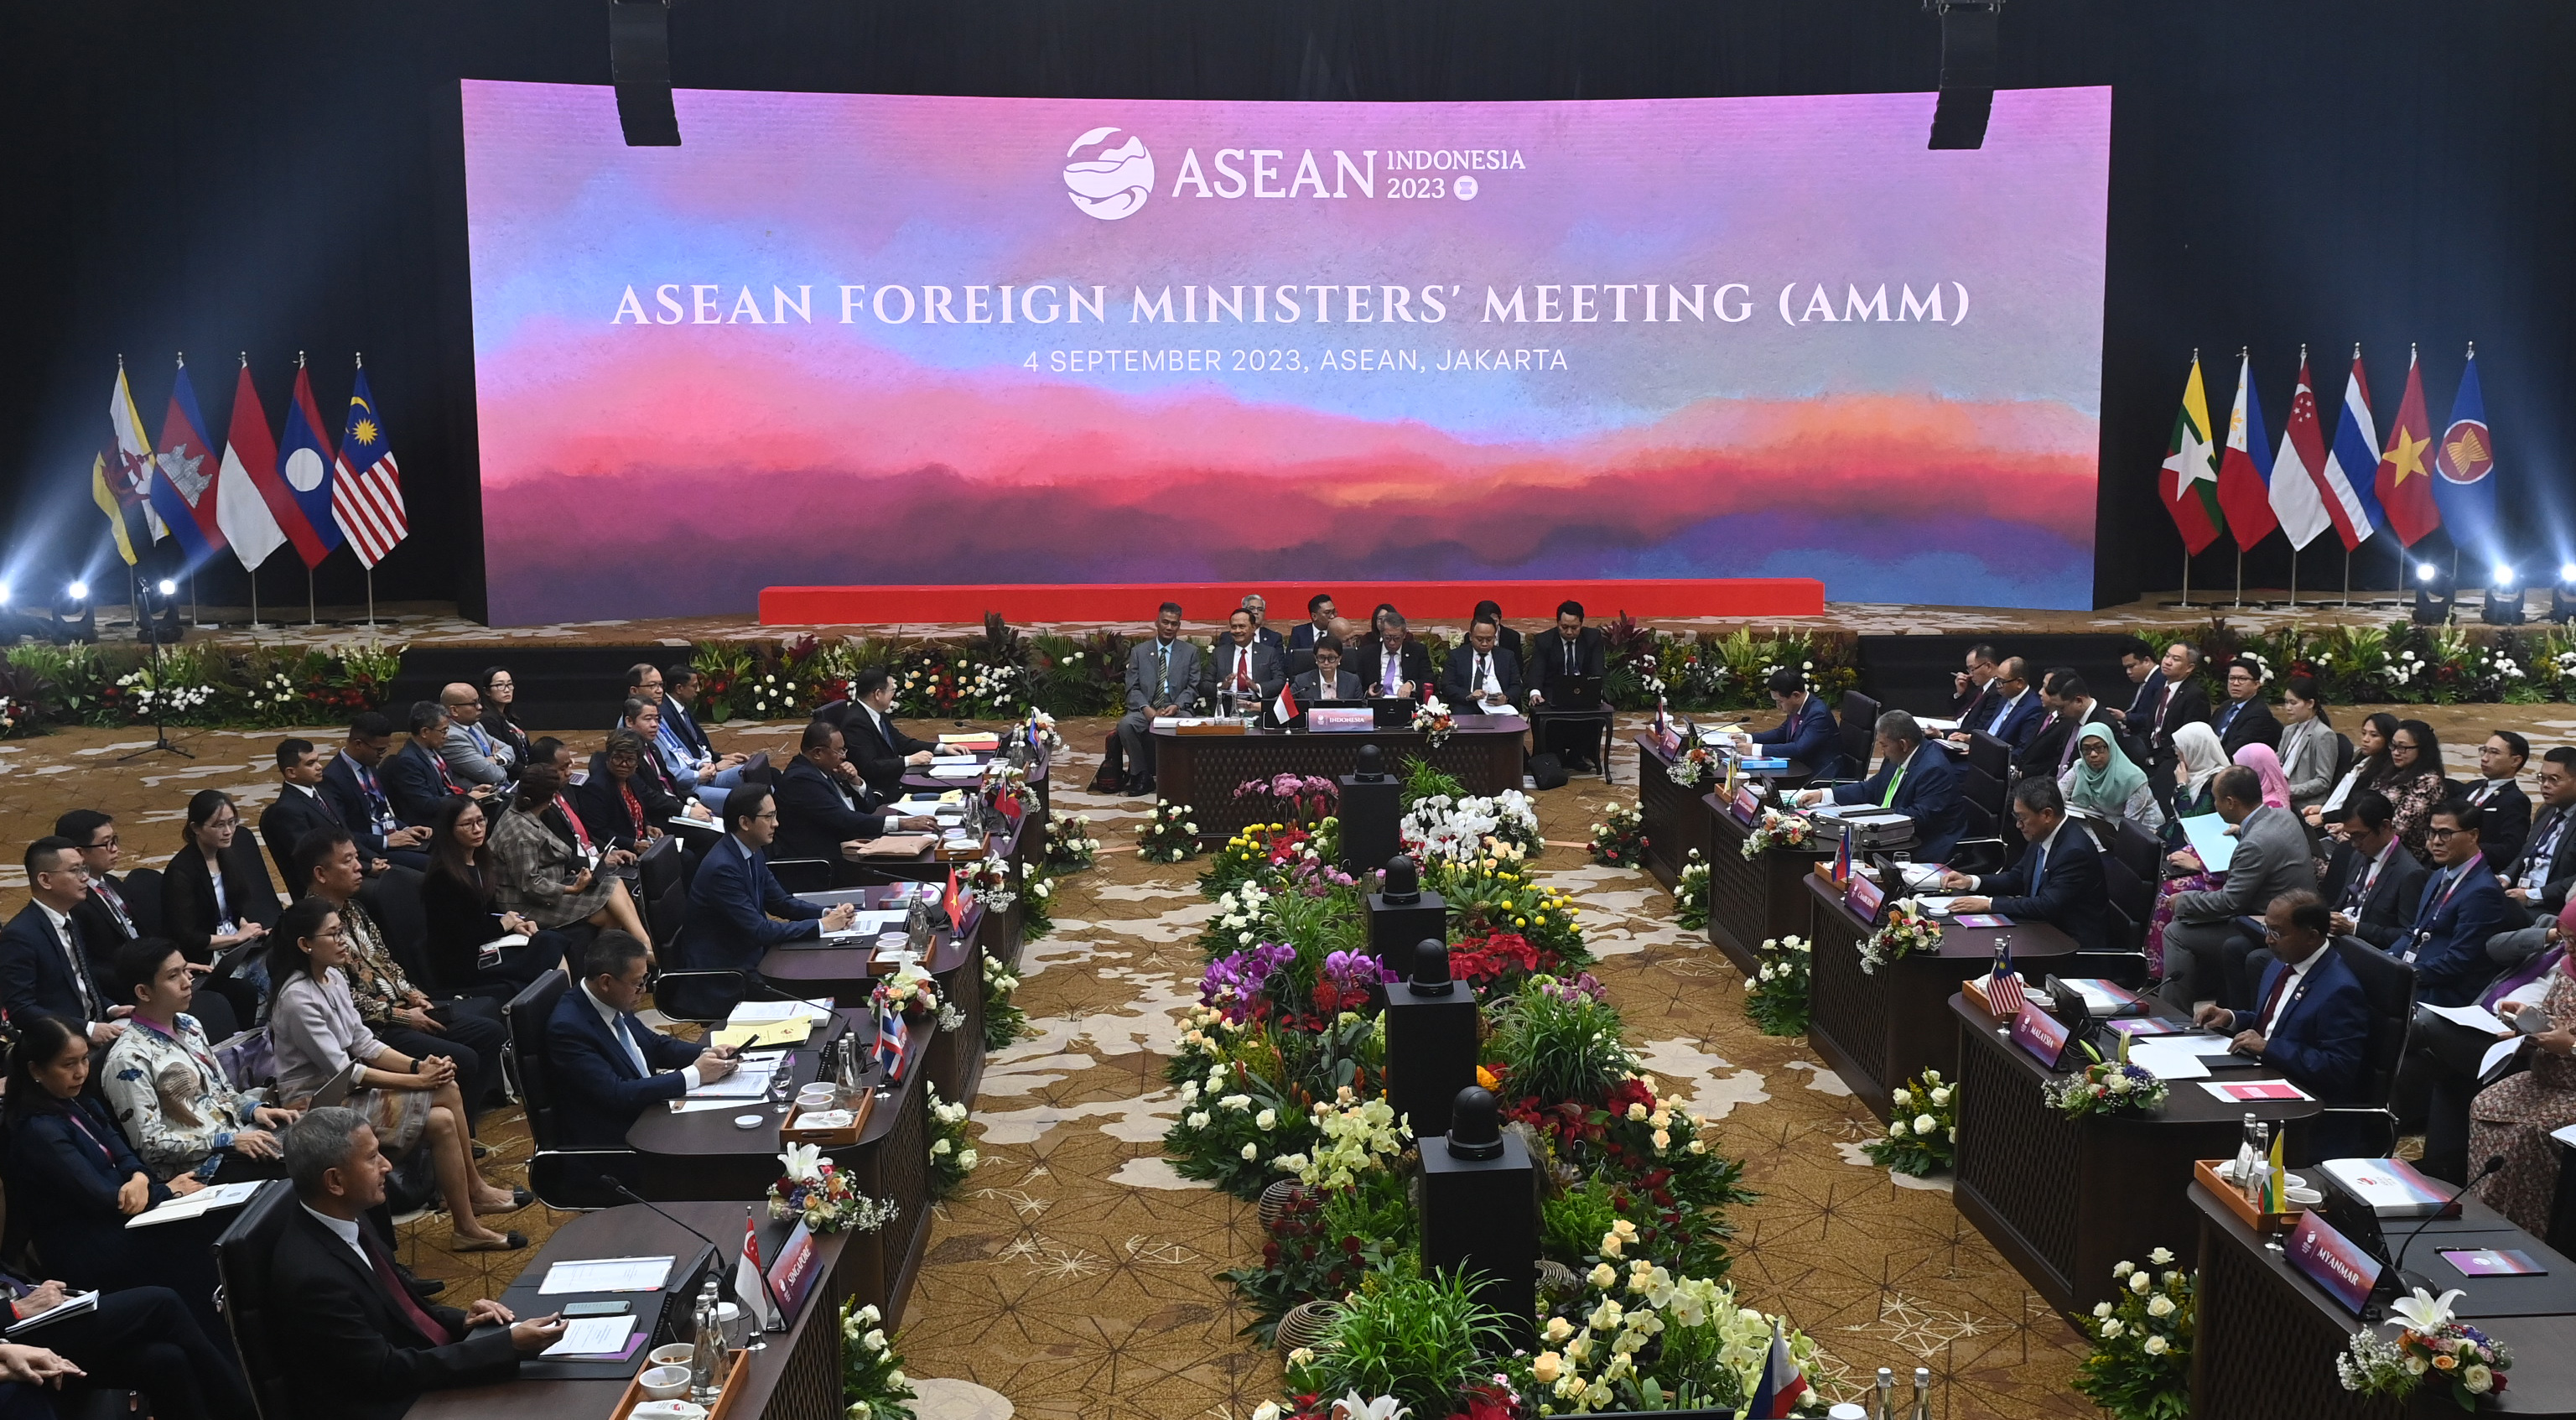 Suasana Pertemuan Menlu ASEAN (AMM)